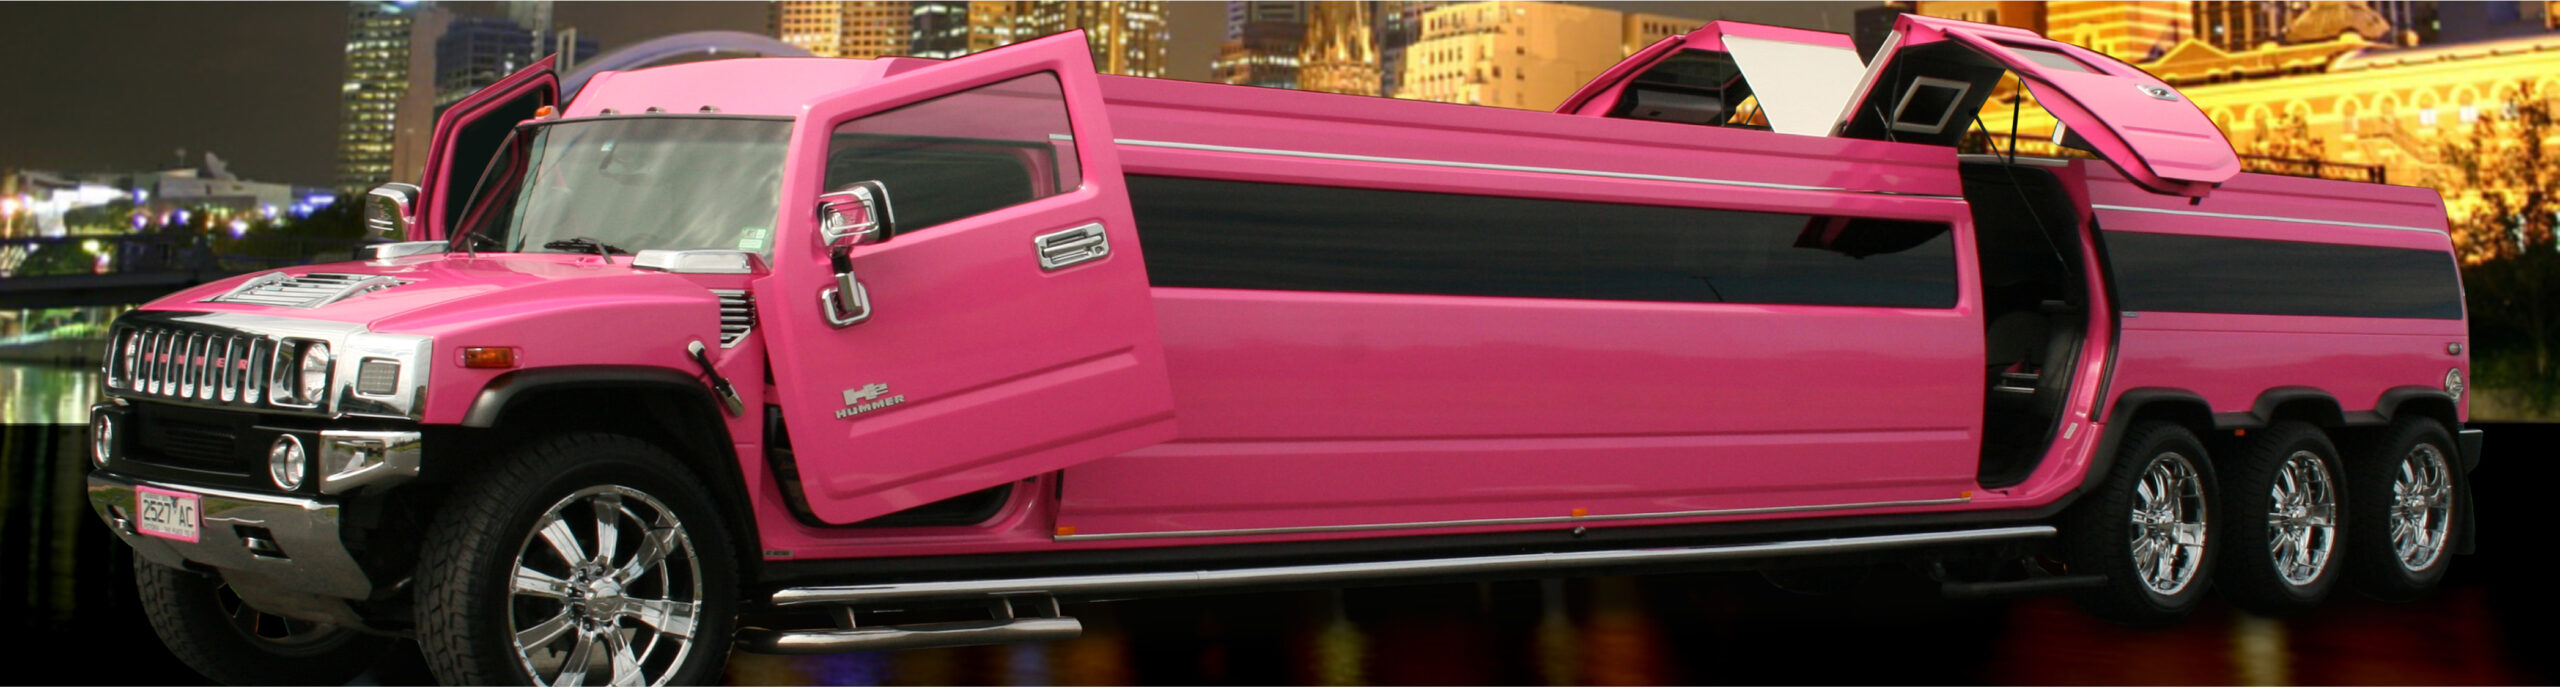 hummer limousines - pink hens